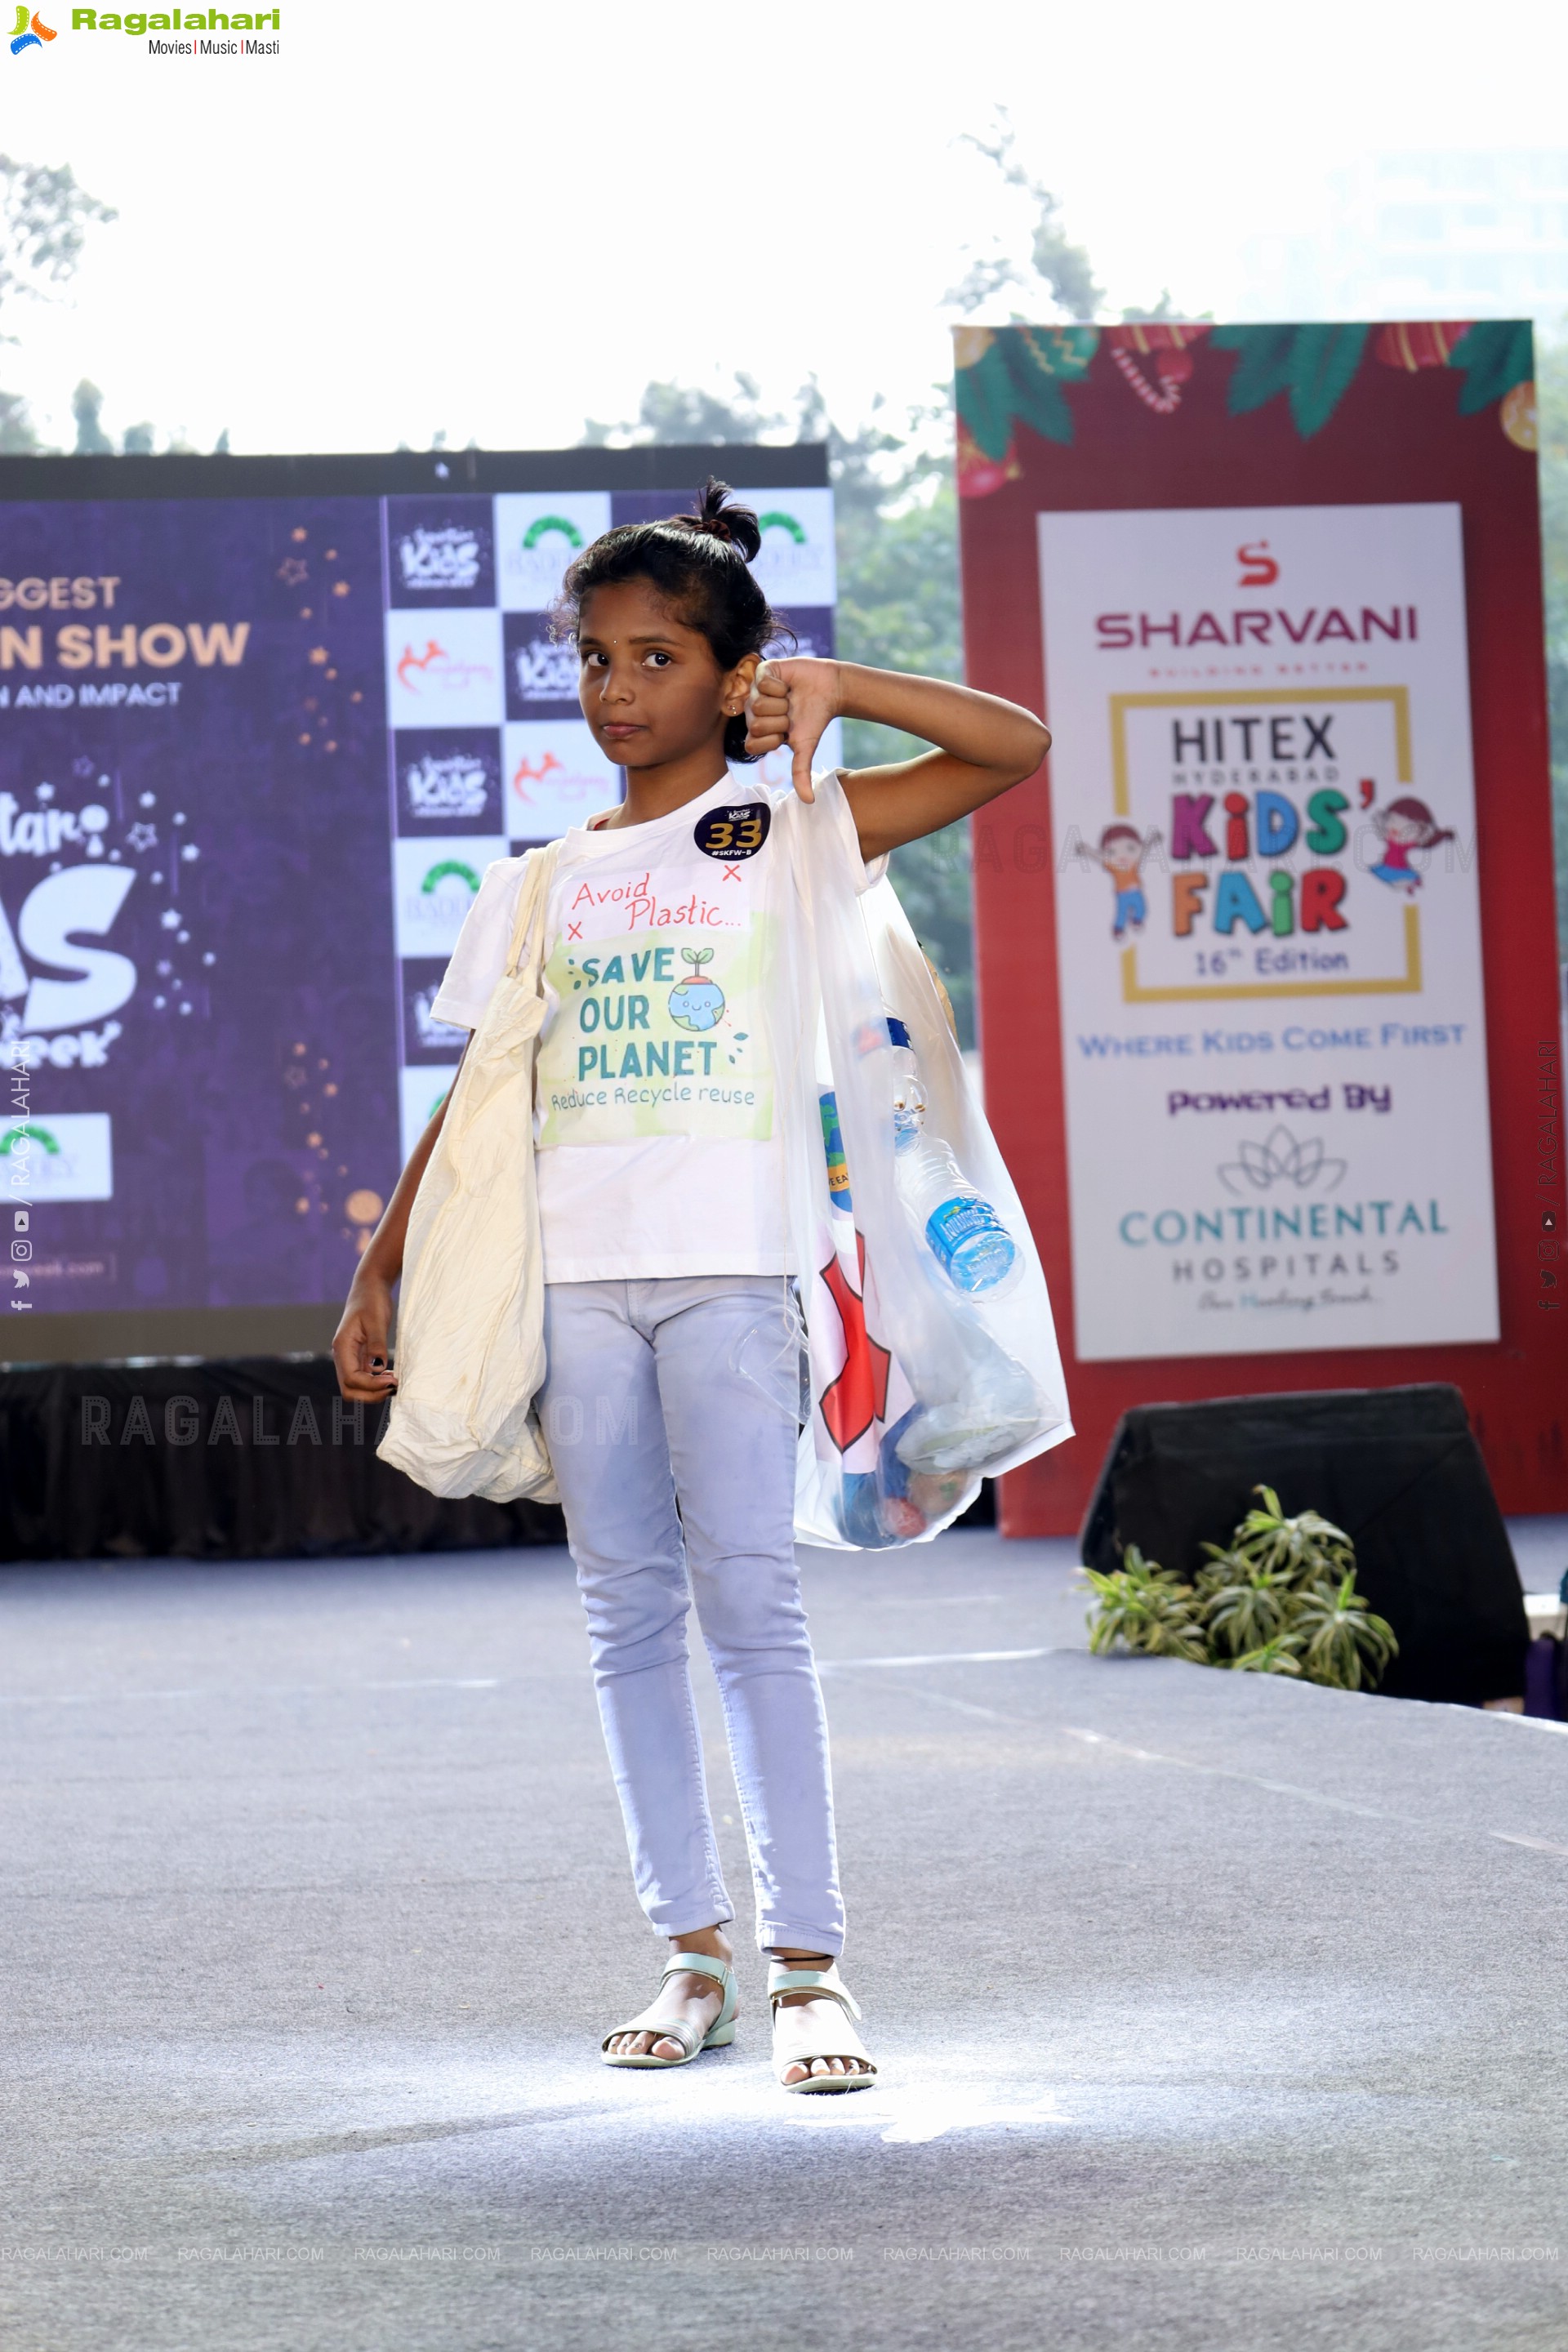 Super Star Kids Fashion Week at Hitex Exhibition Centre, Hitech City.